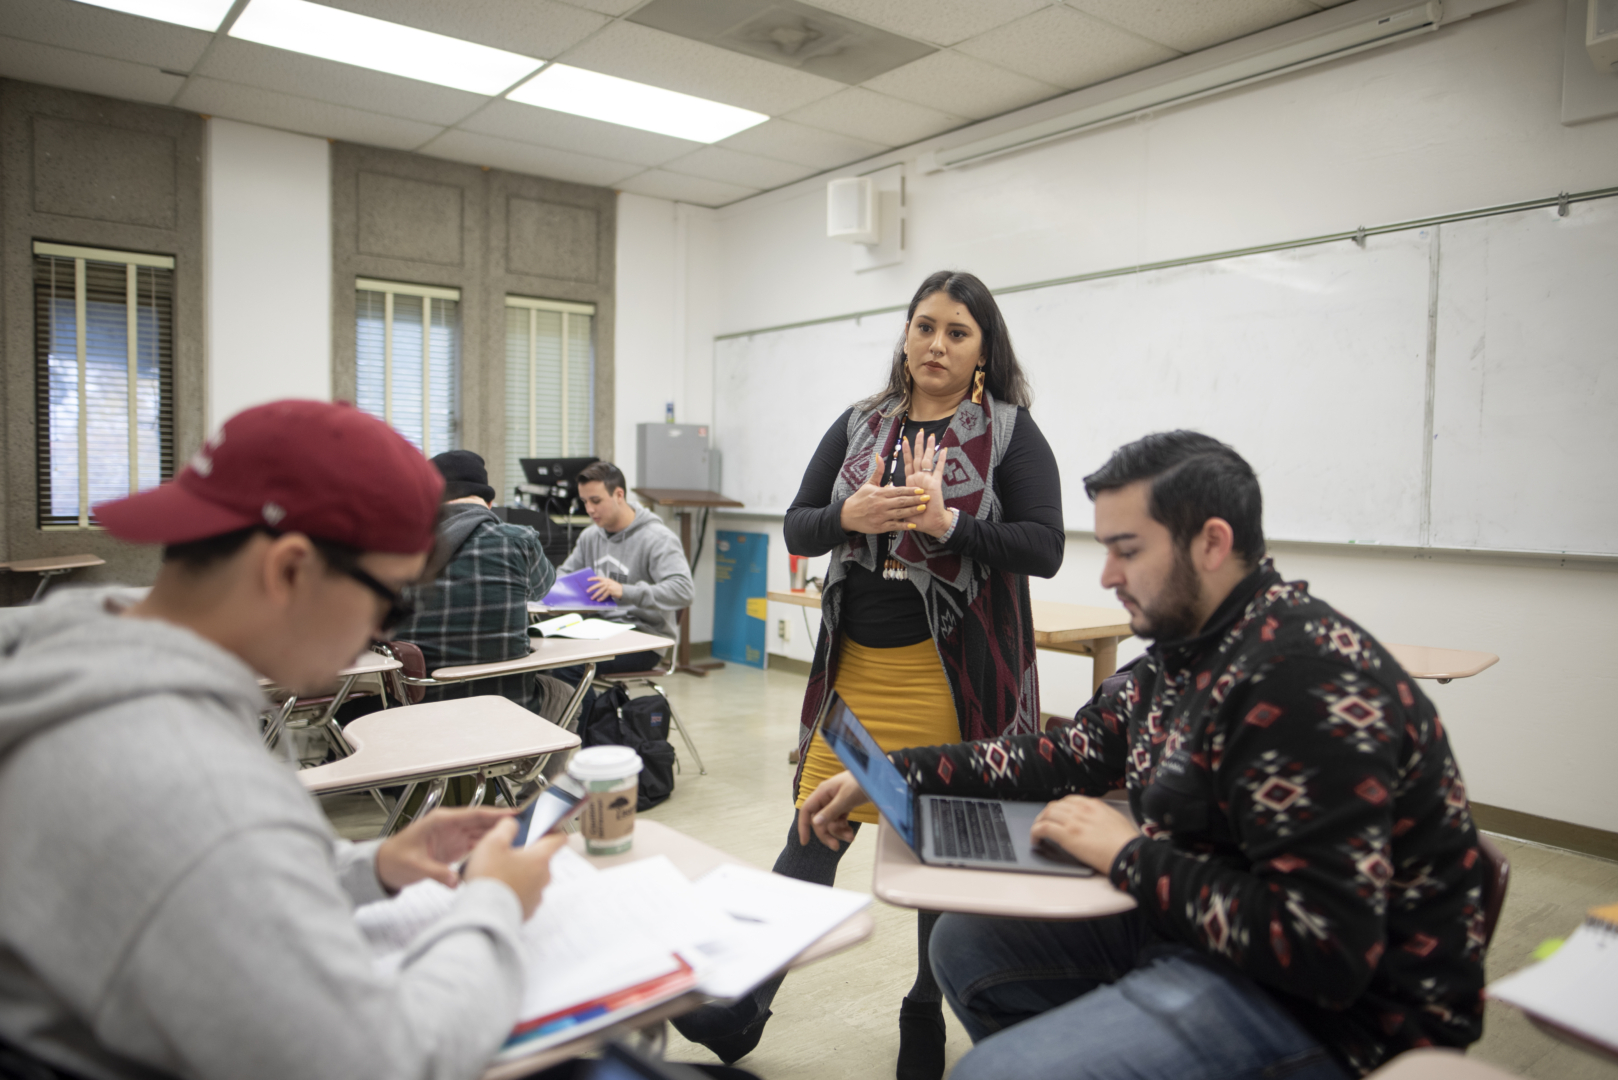 Professor of American Indian studies Vanessa Esquivido stands next to students discussing work in her class.